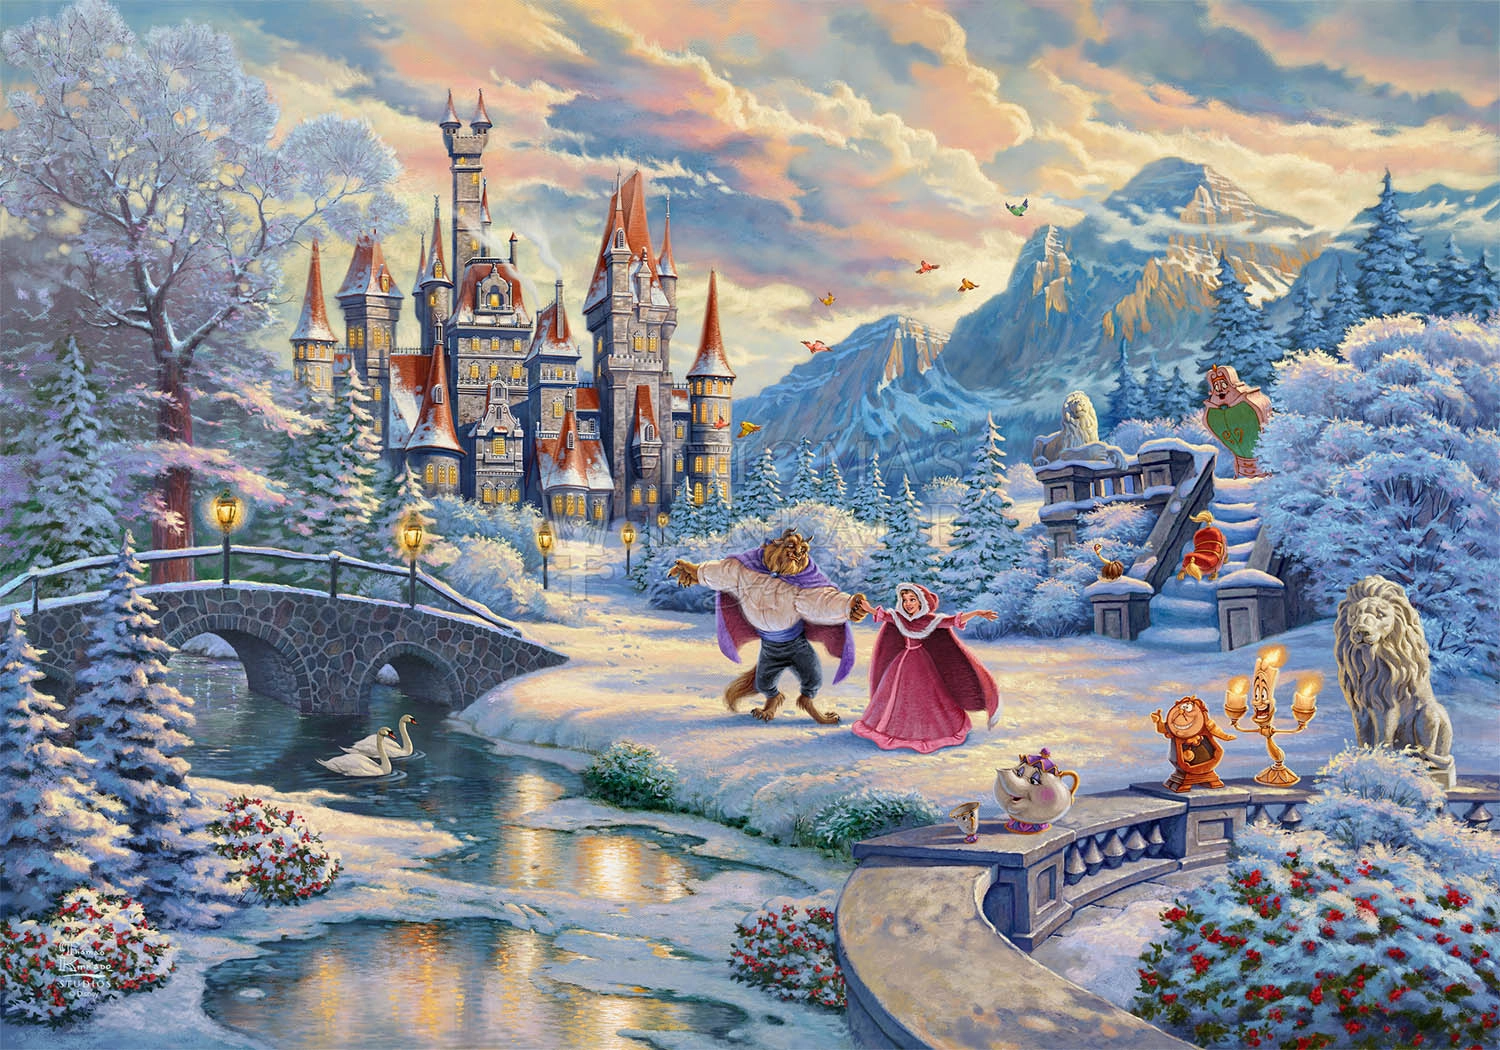 Thomas Kinkade Disney Beauty And The Beast's Winter Enchantment Giclee On Canvas